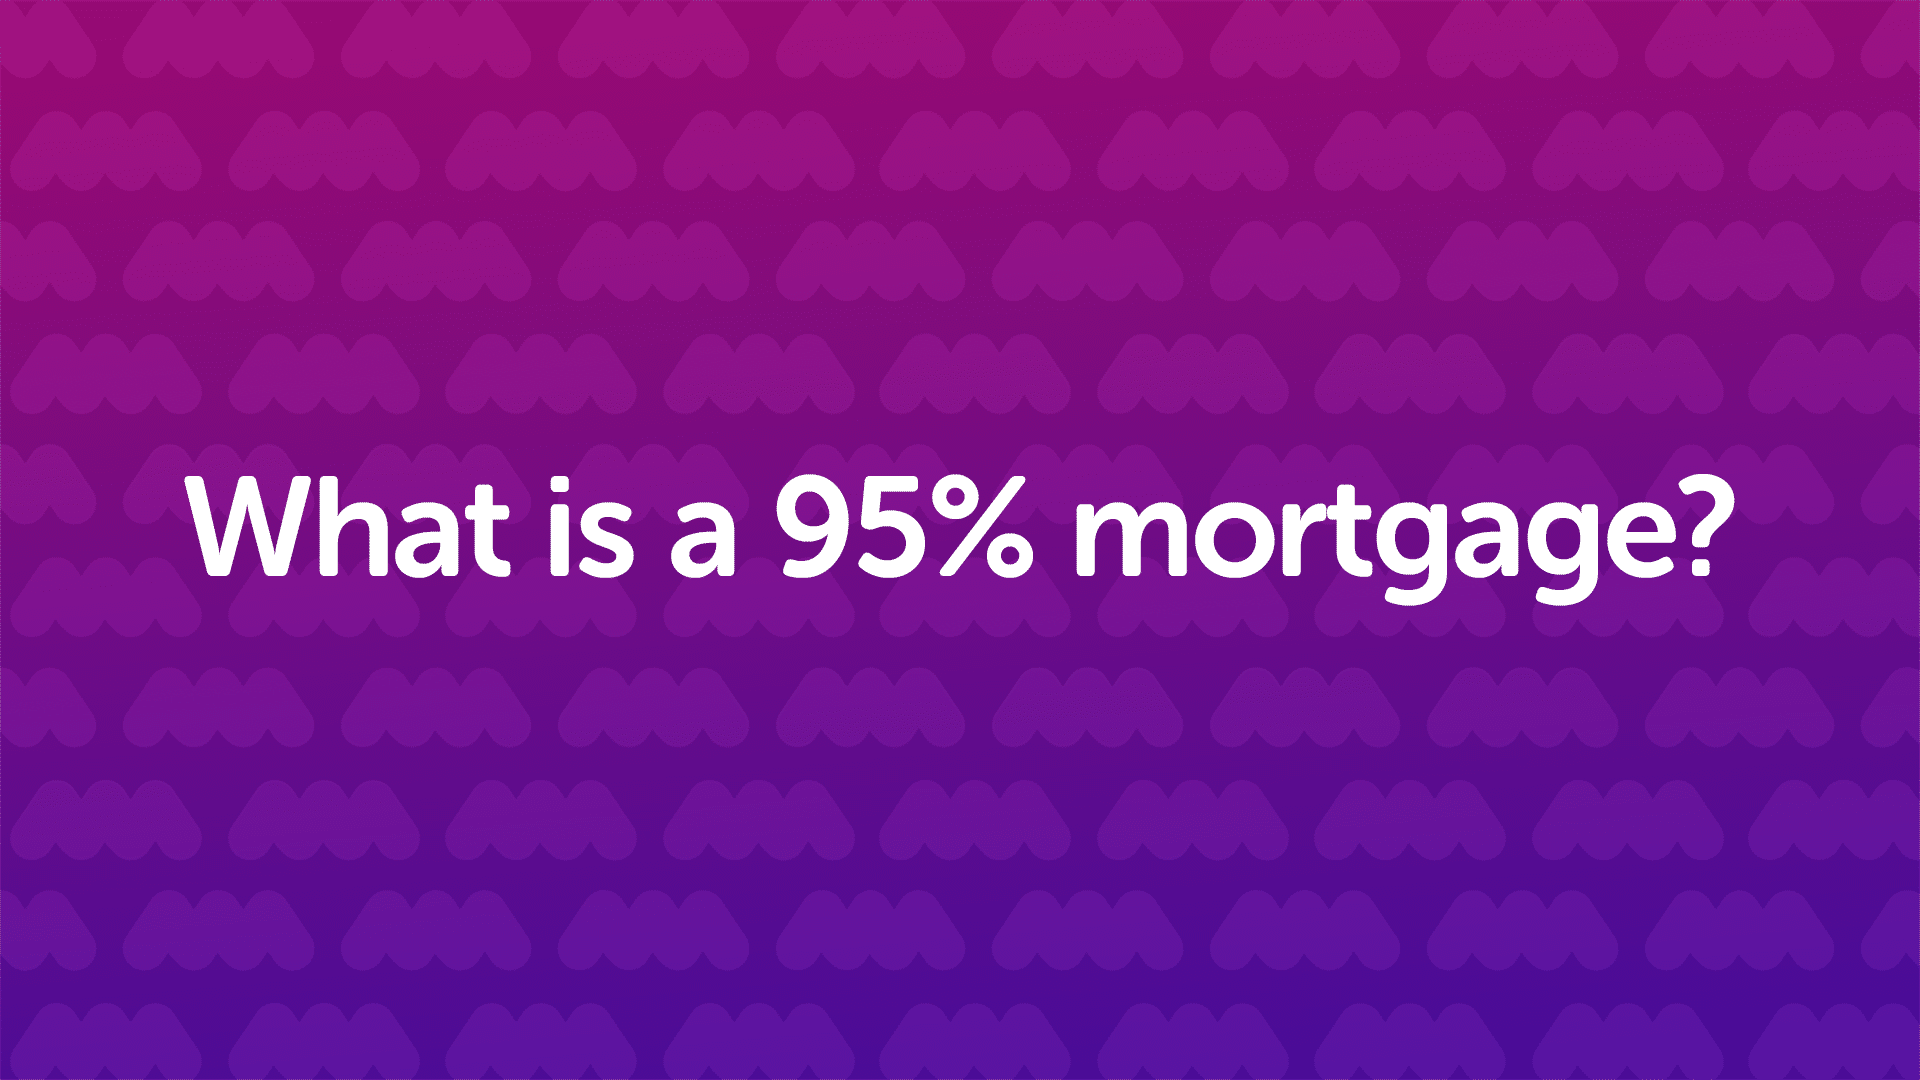 95% Mortgage | Cardiffmoneyman